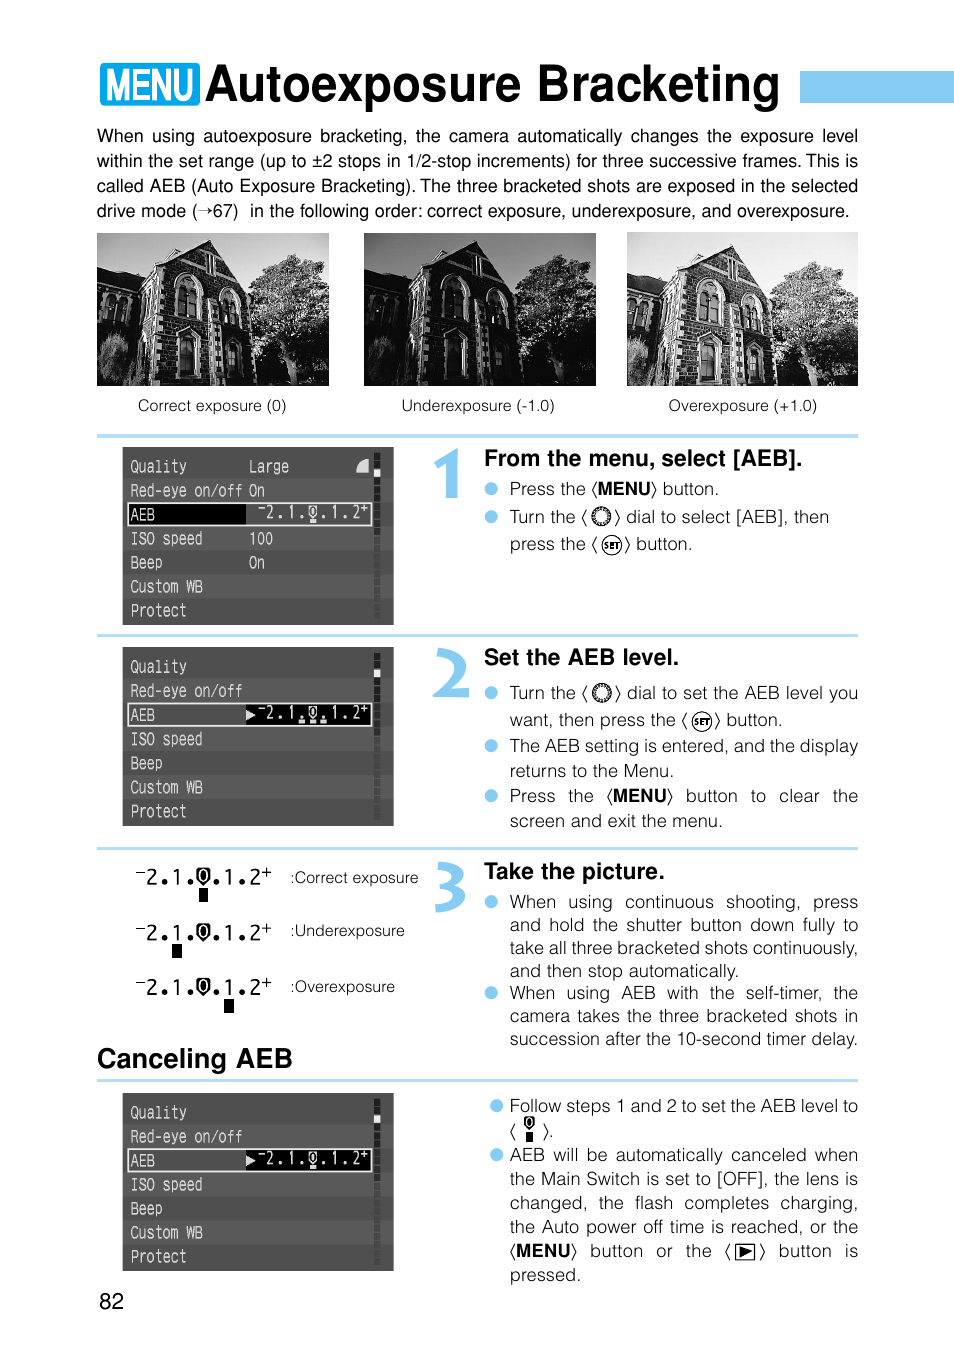 Autoexposure bracketing, Canceling aeb | Canon EOS D30 User Manual | Page 82 / 152